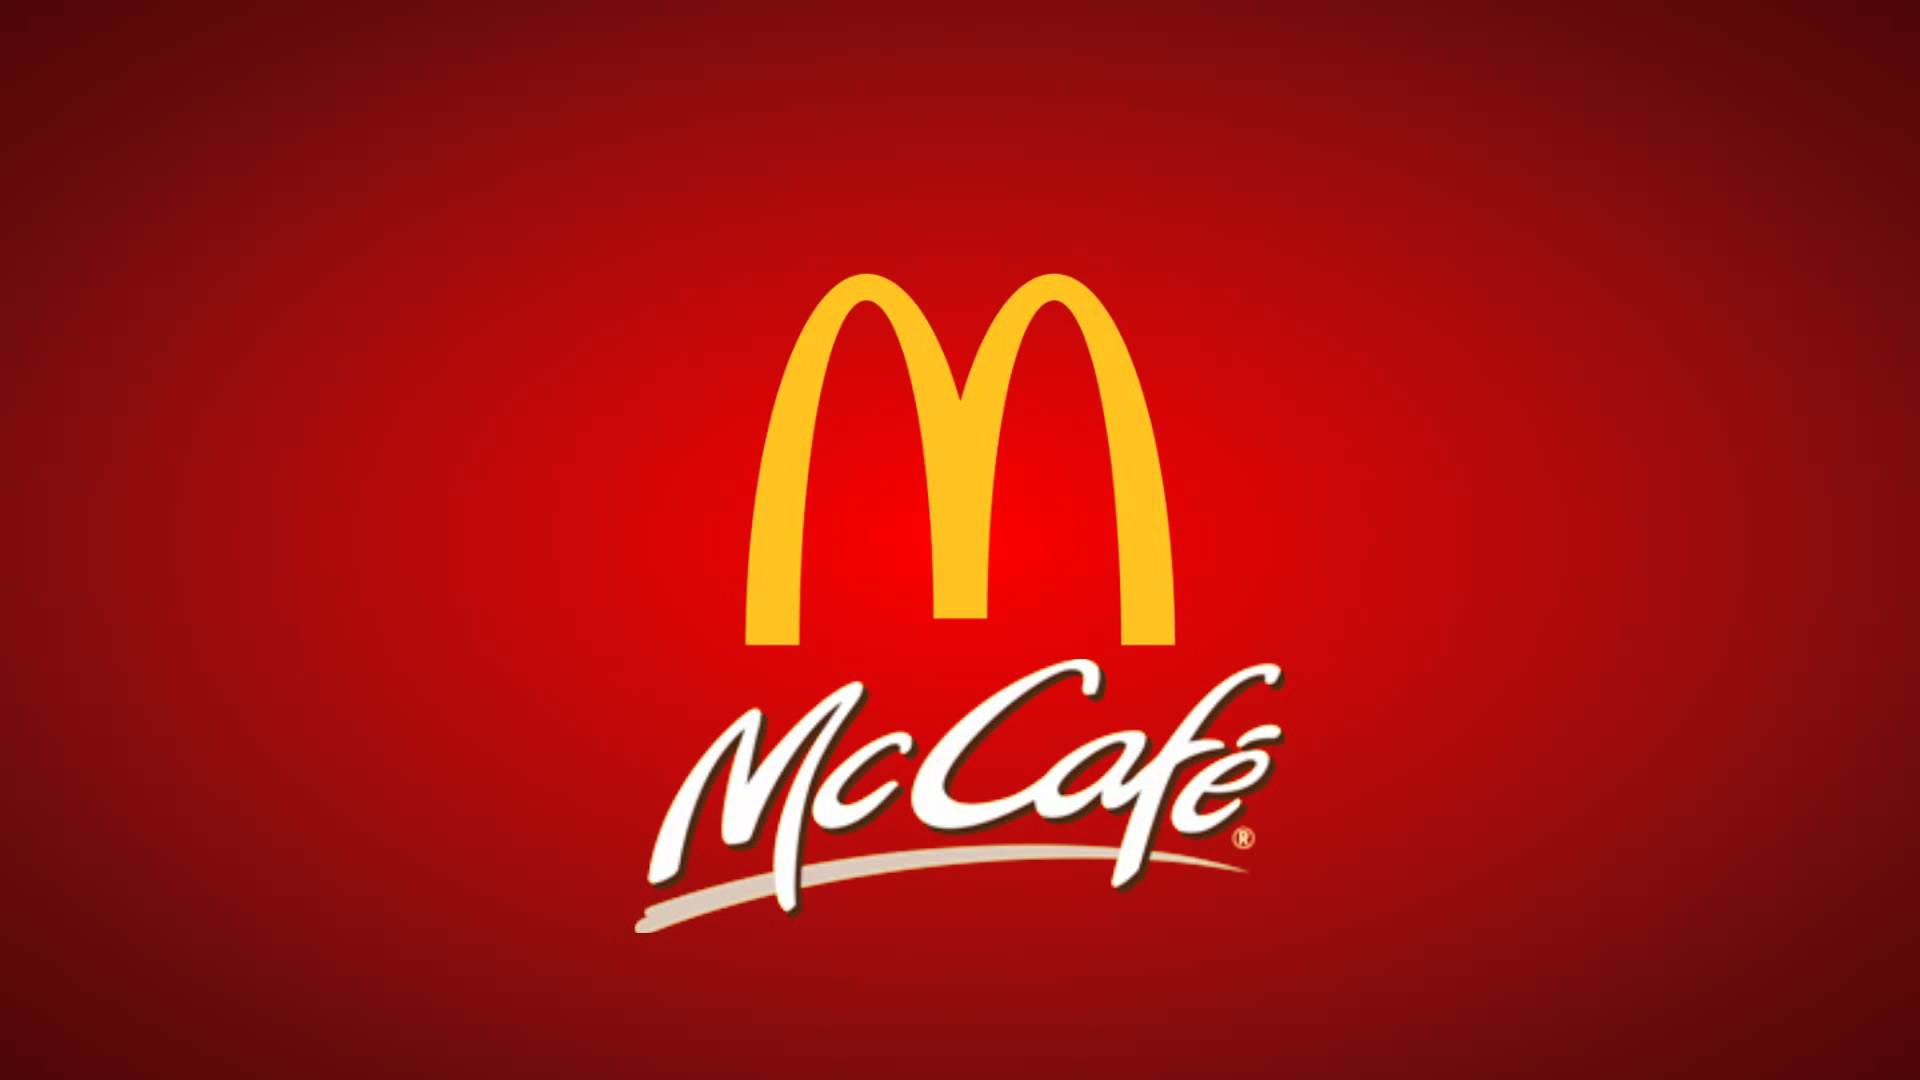 McDonald's McCaffe Smoothie